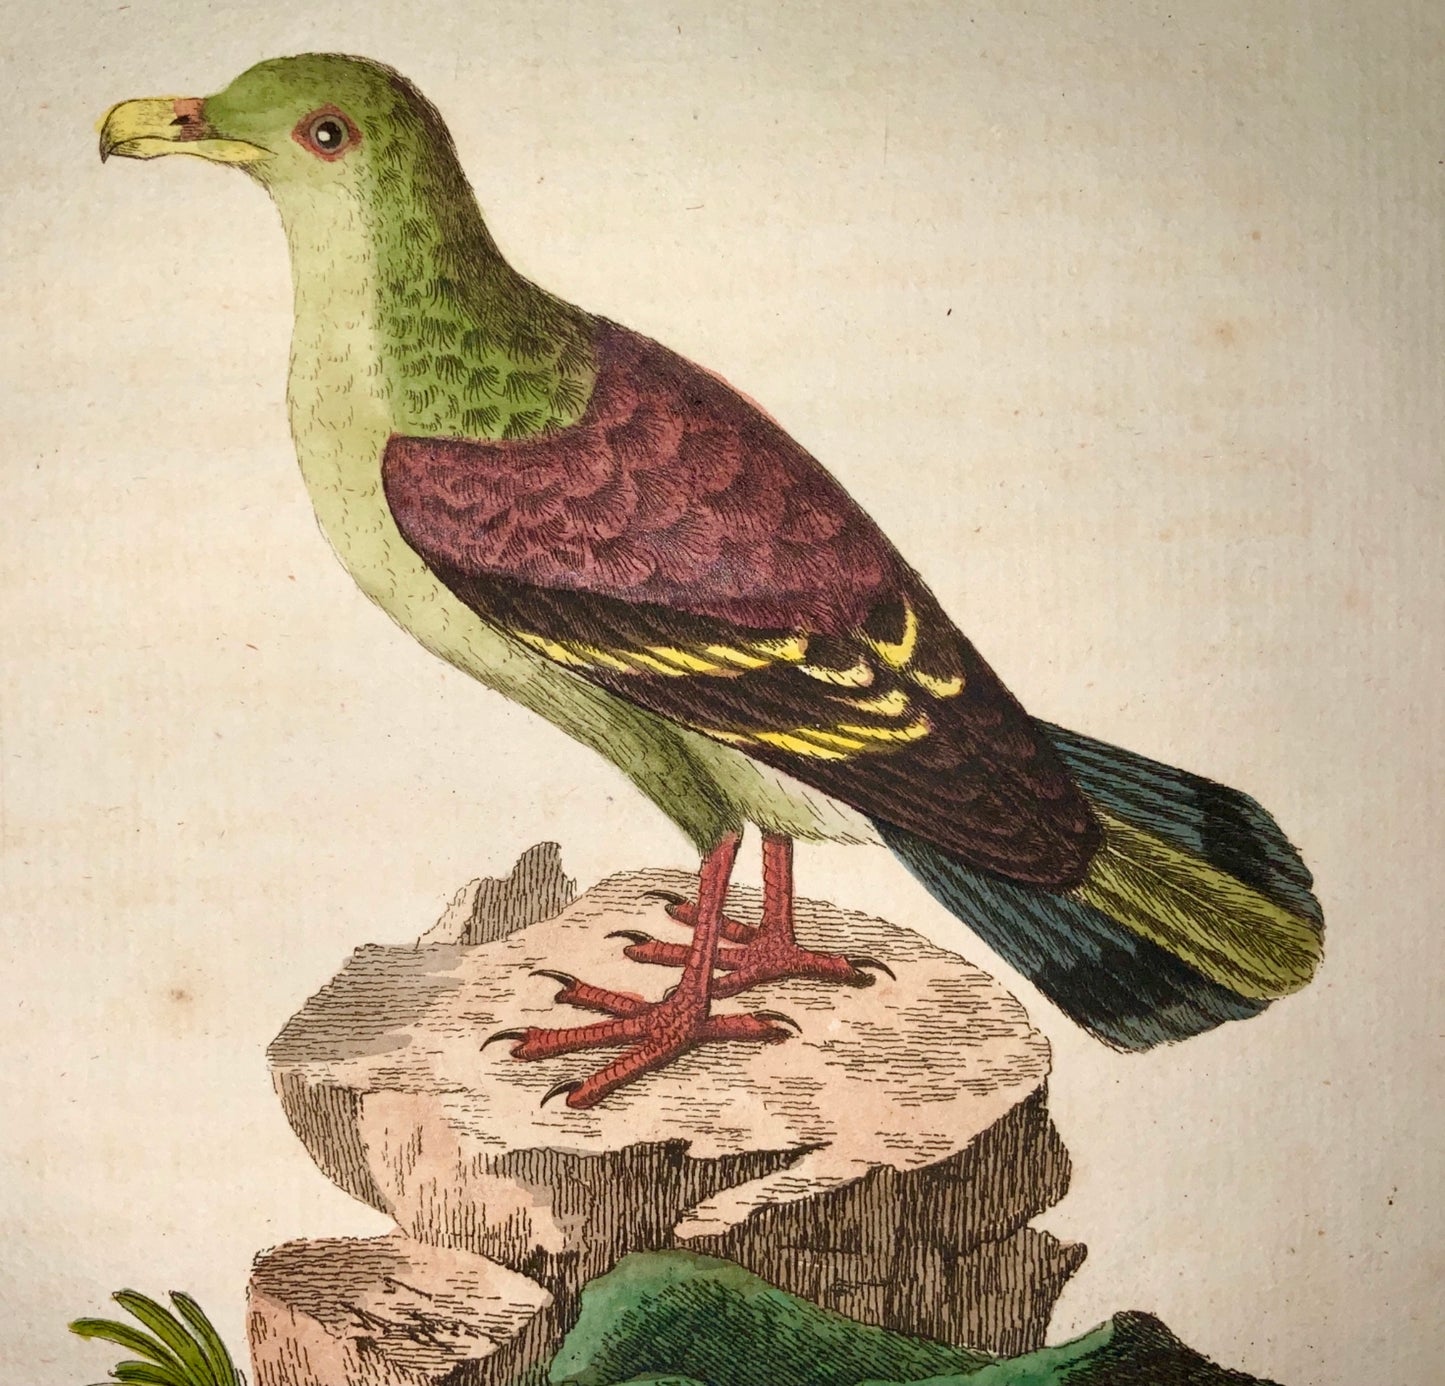 1785 John Latham - Synopsis - PIGEON - hand coloured engraving - Ornithology